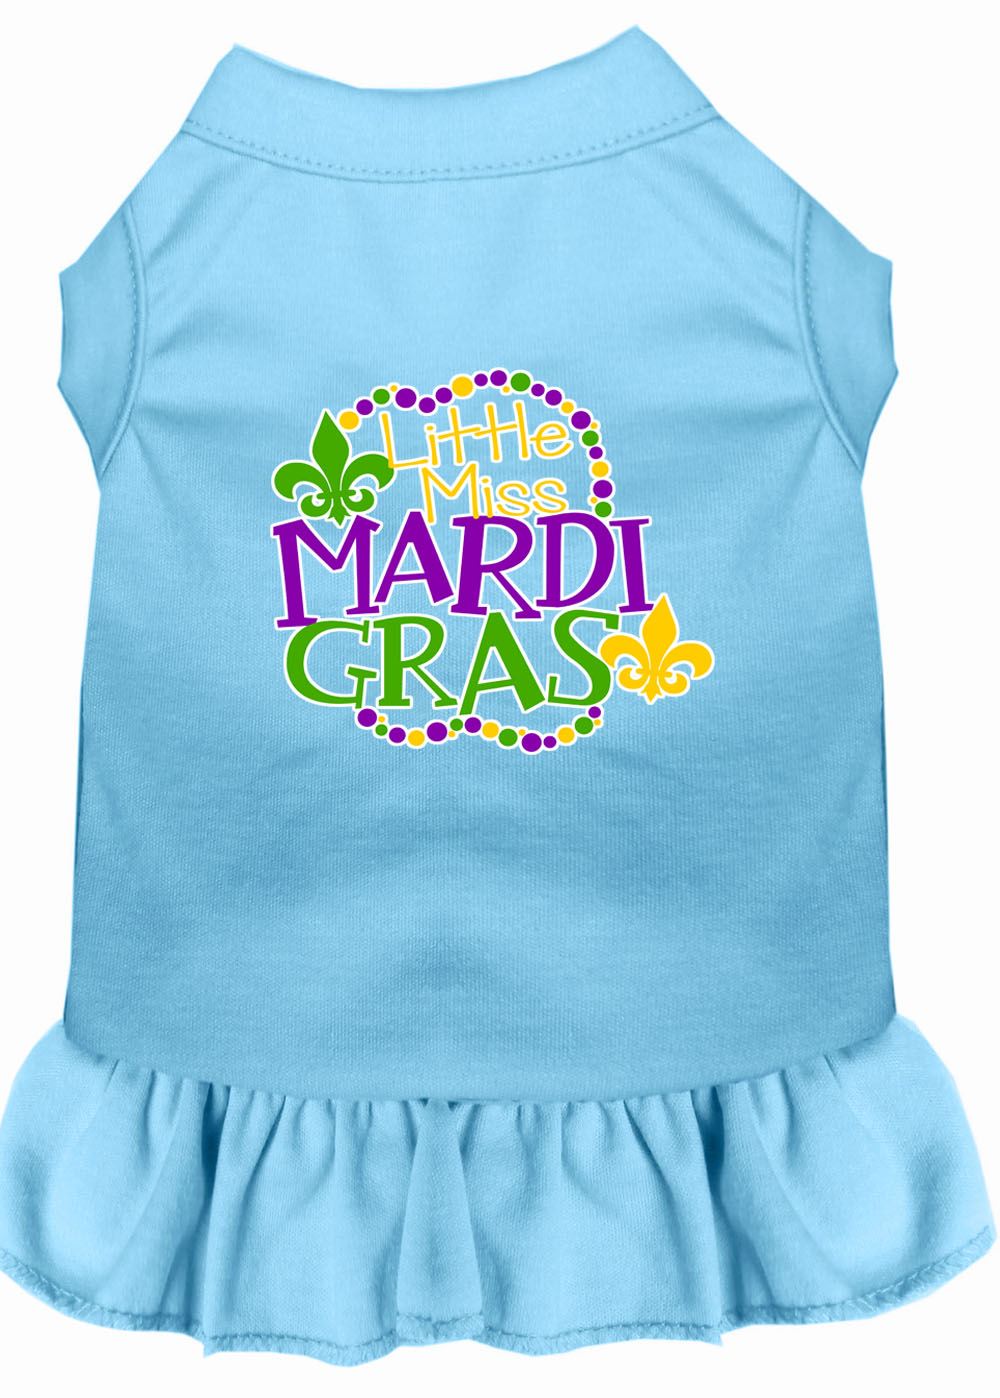 Miss Mardi Gras Screen Print Mardi Gras Dog Dress Baby Blue Med